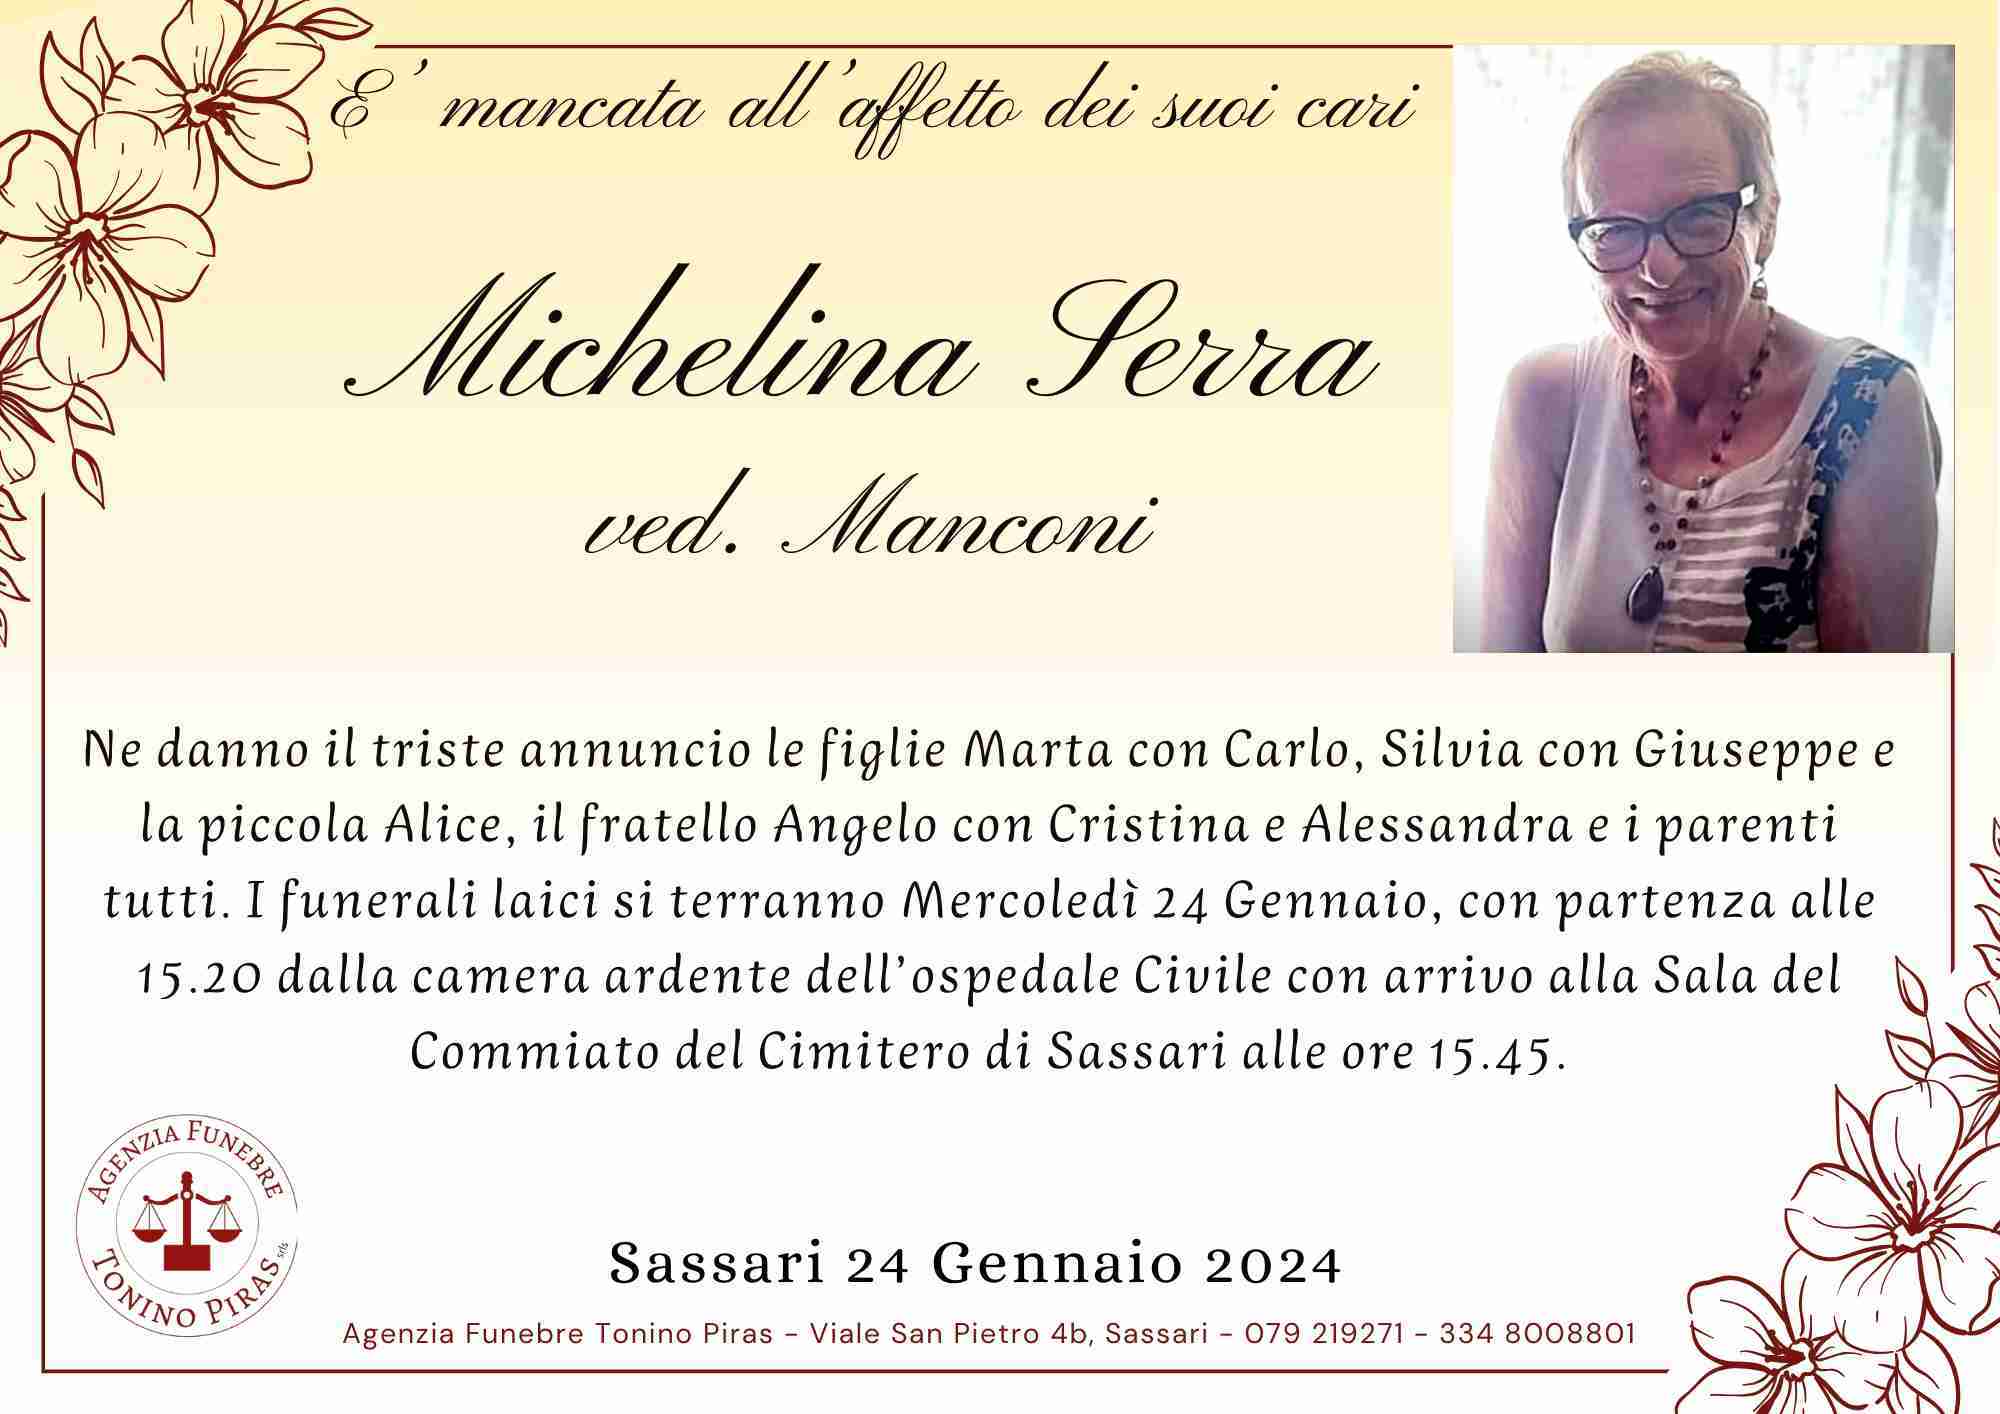 Michelina Serra